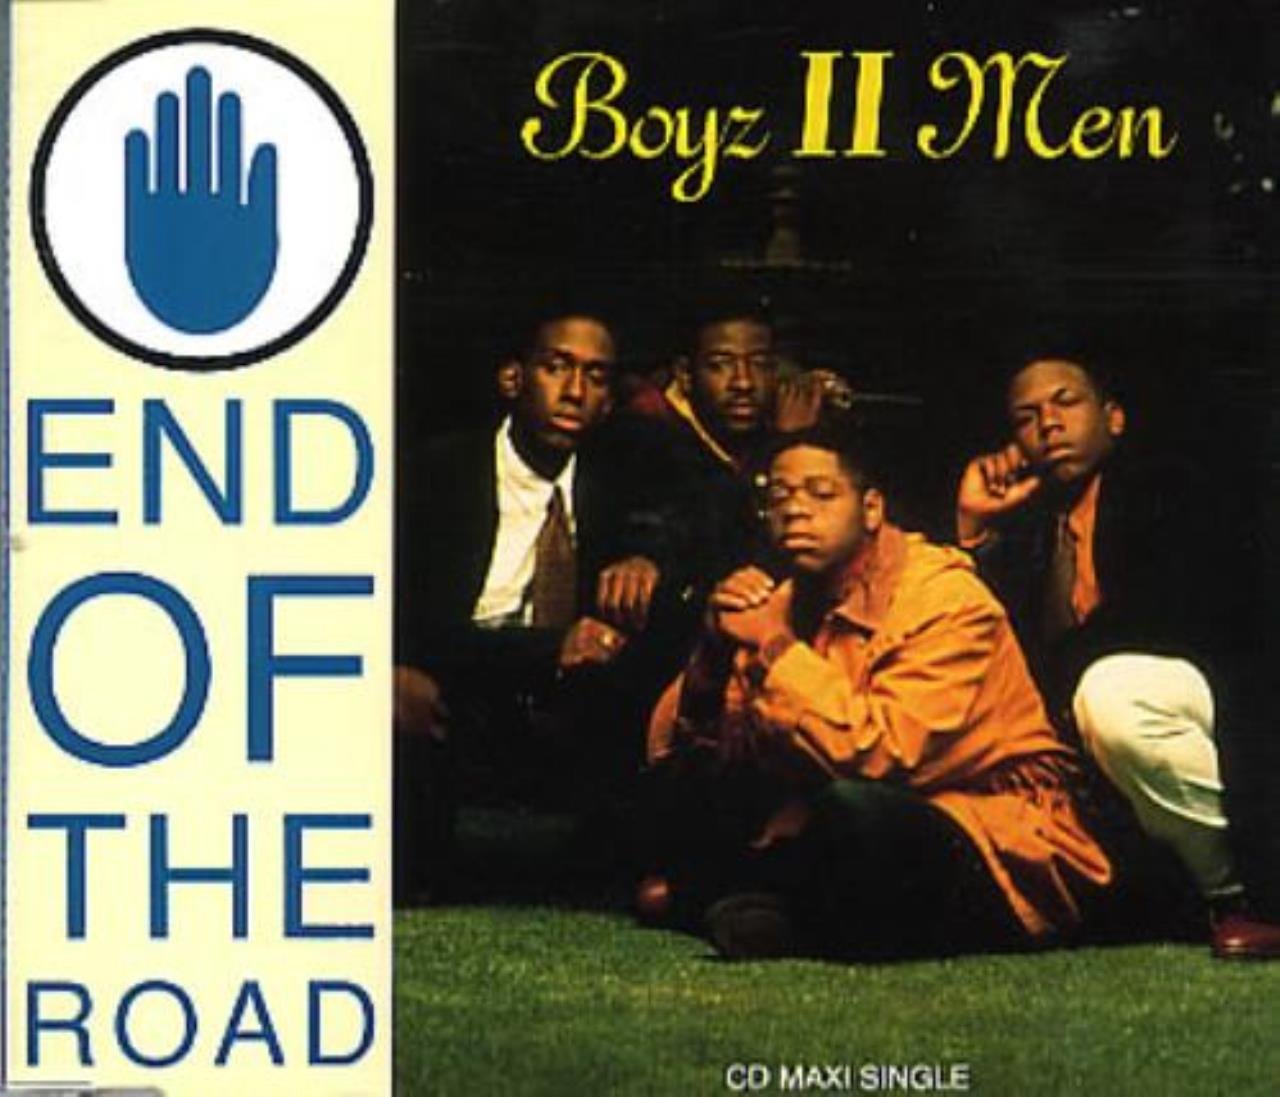 Boyz II Men - End Of The Road mp3 download